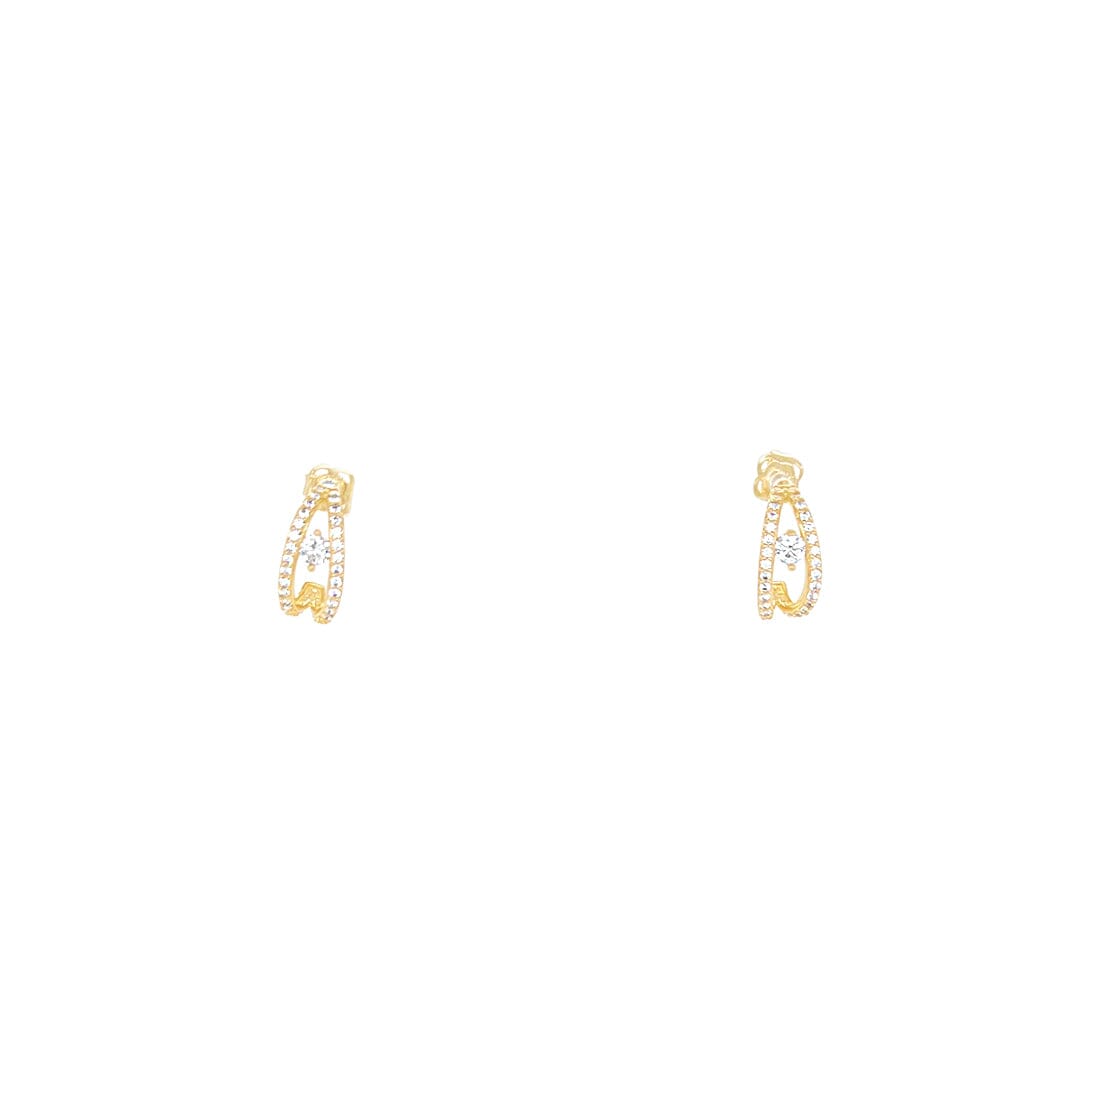 Double Half Hoop Stud Earrings with Cubic Zirconia in 9ct Yellow Gold Earrings Bevilles 